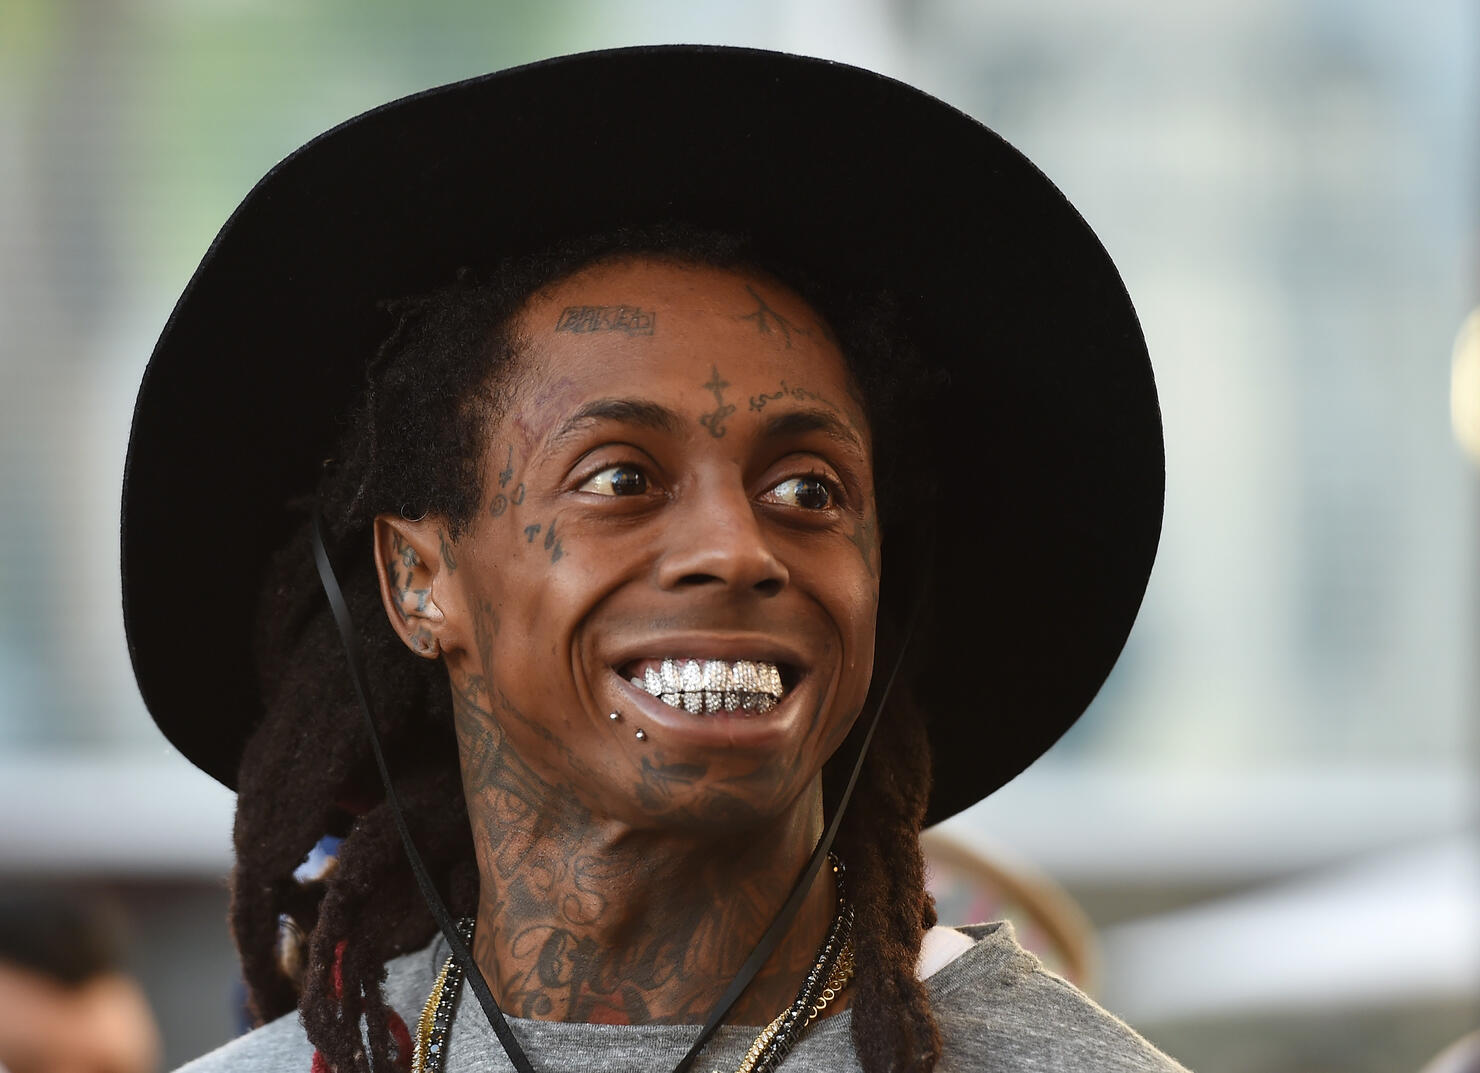 A. Lil Wayne!